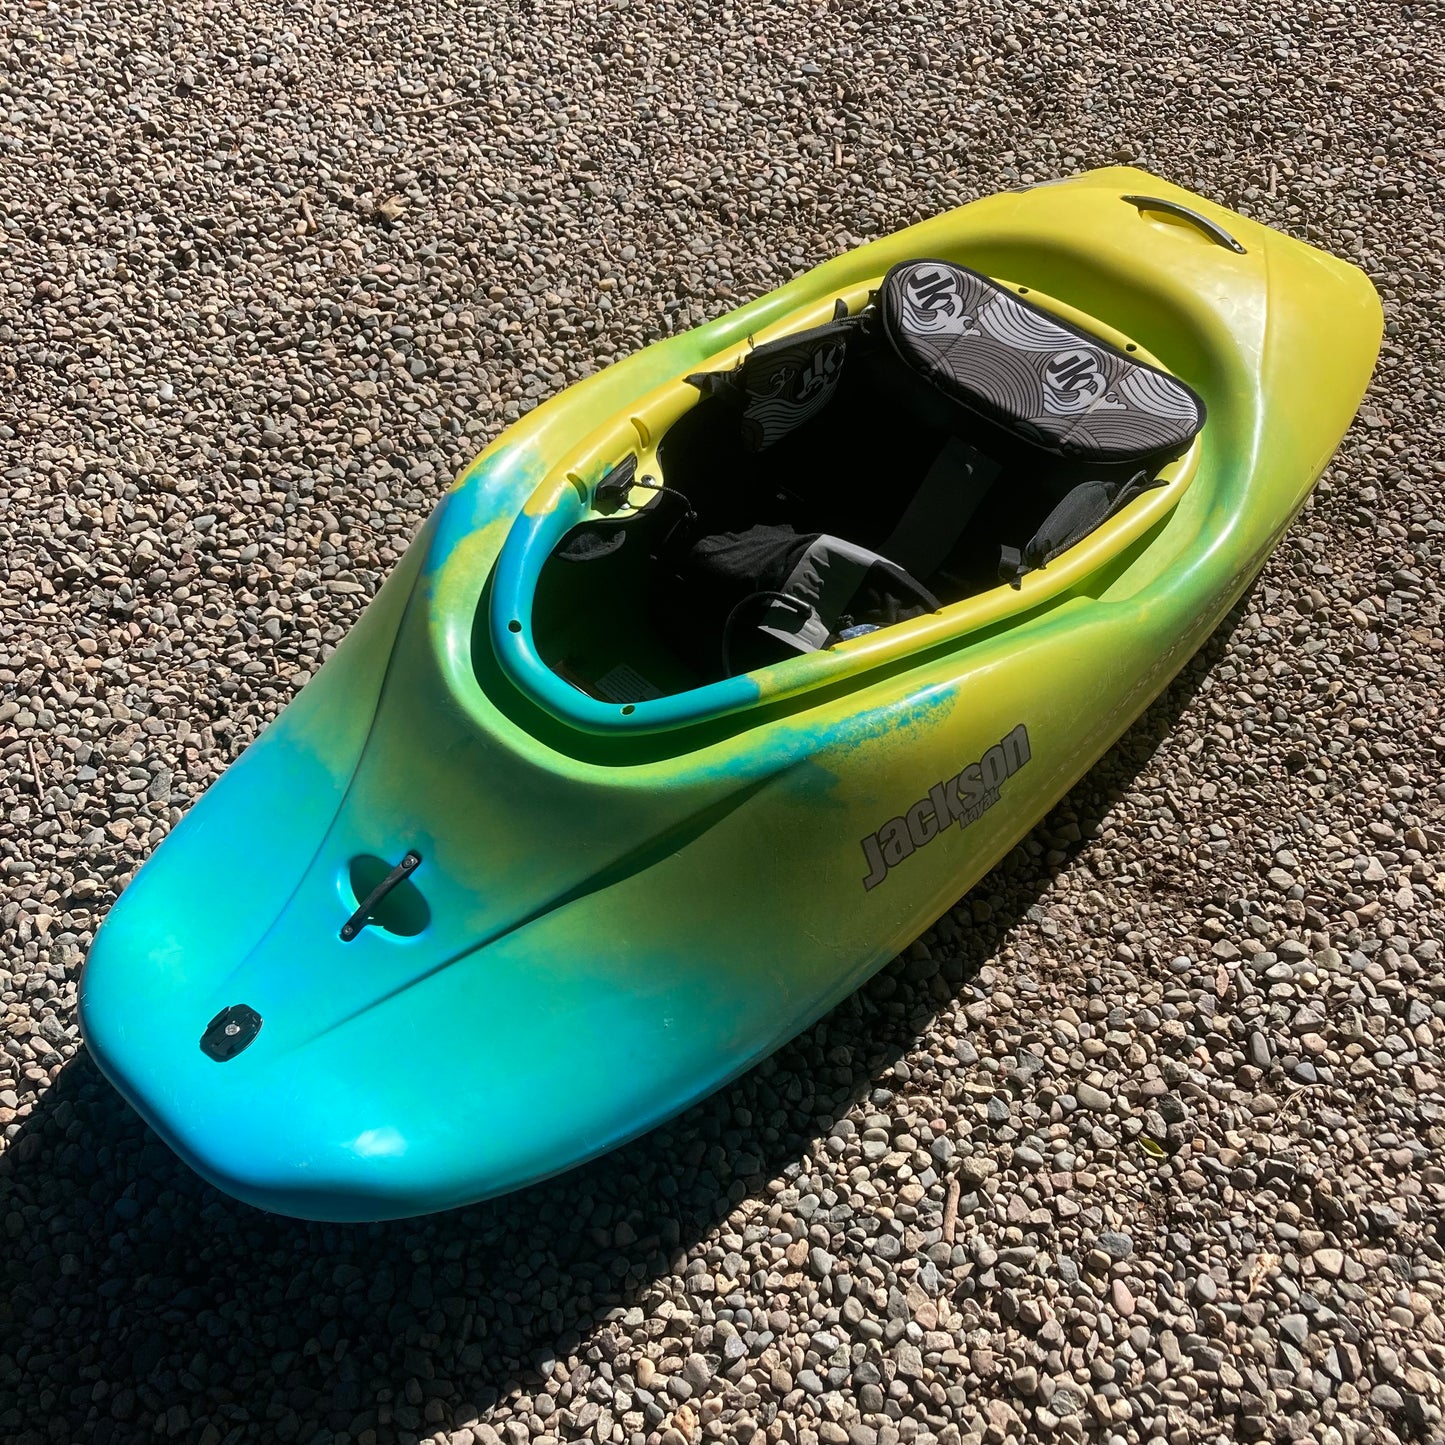 A yellow and blue Demo Rockstar V LG kayak sitting on gravel, made by Jackson Kayak.